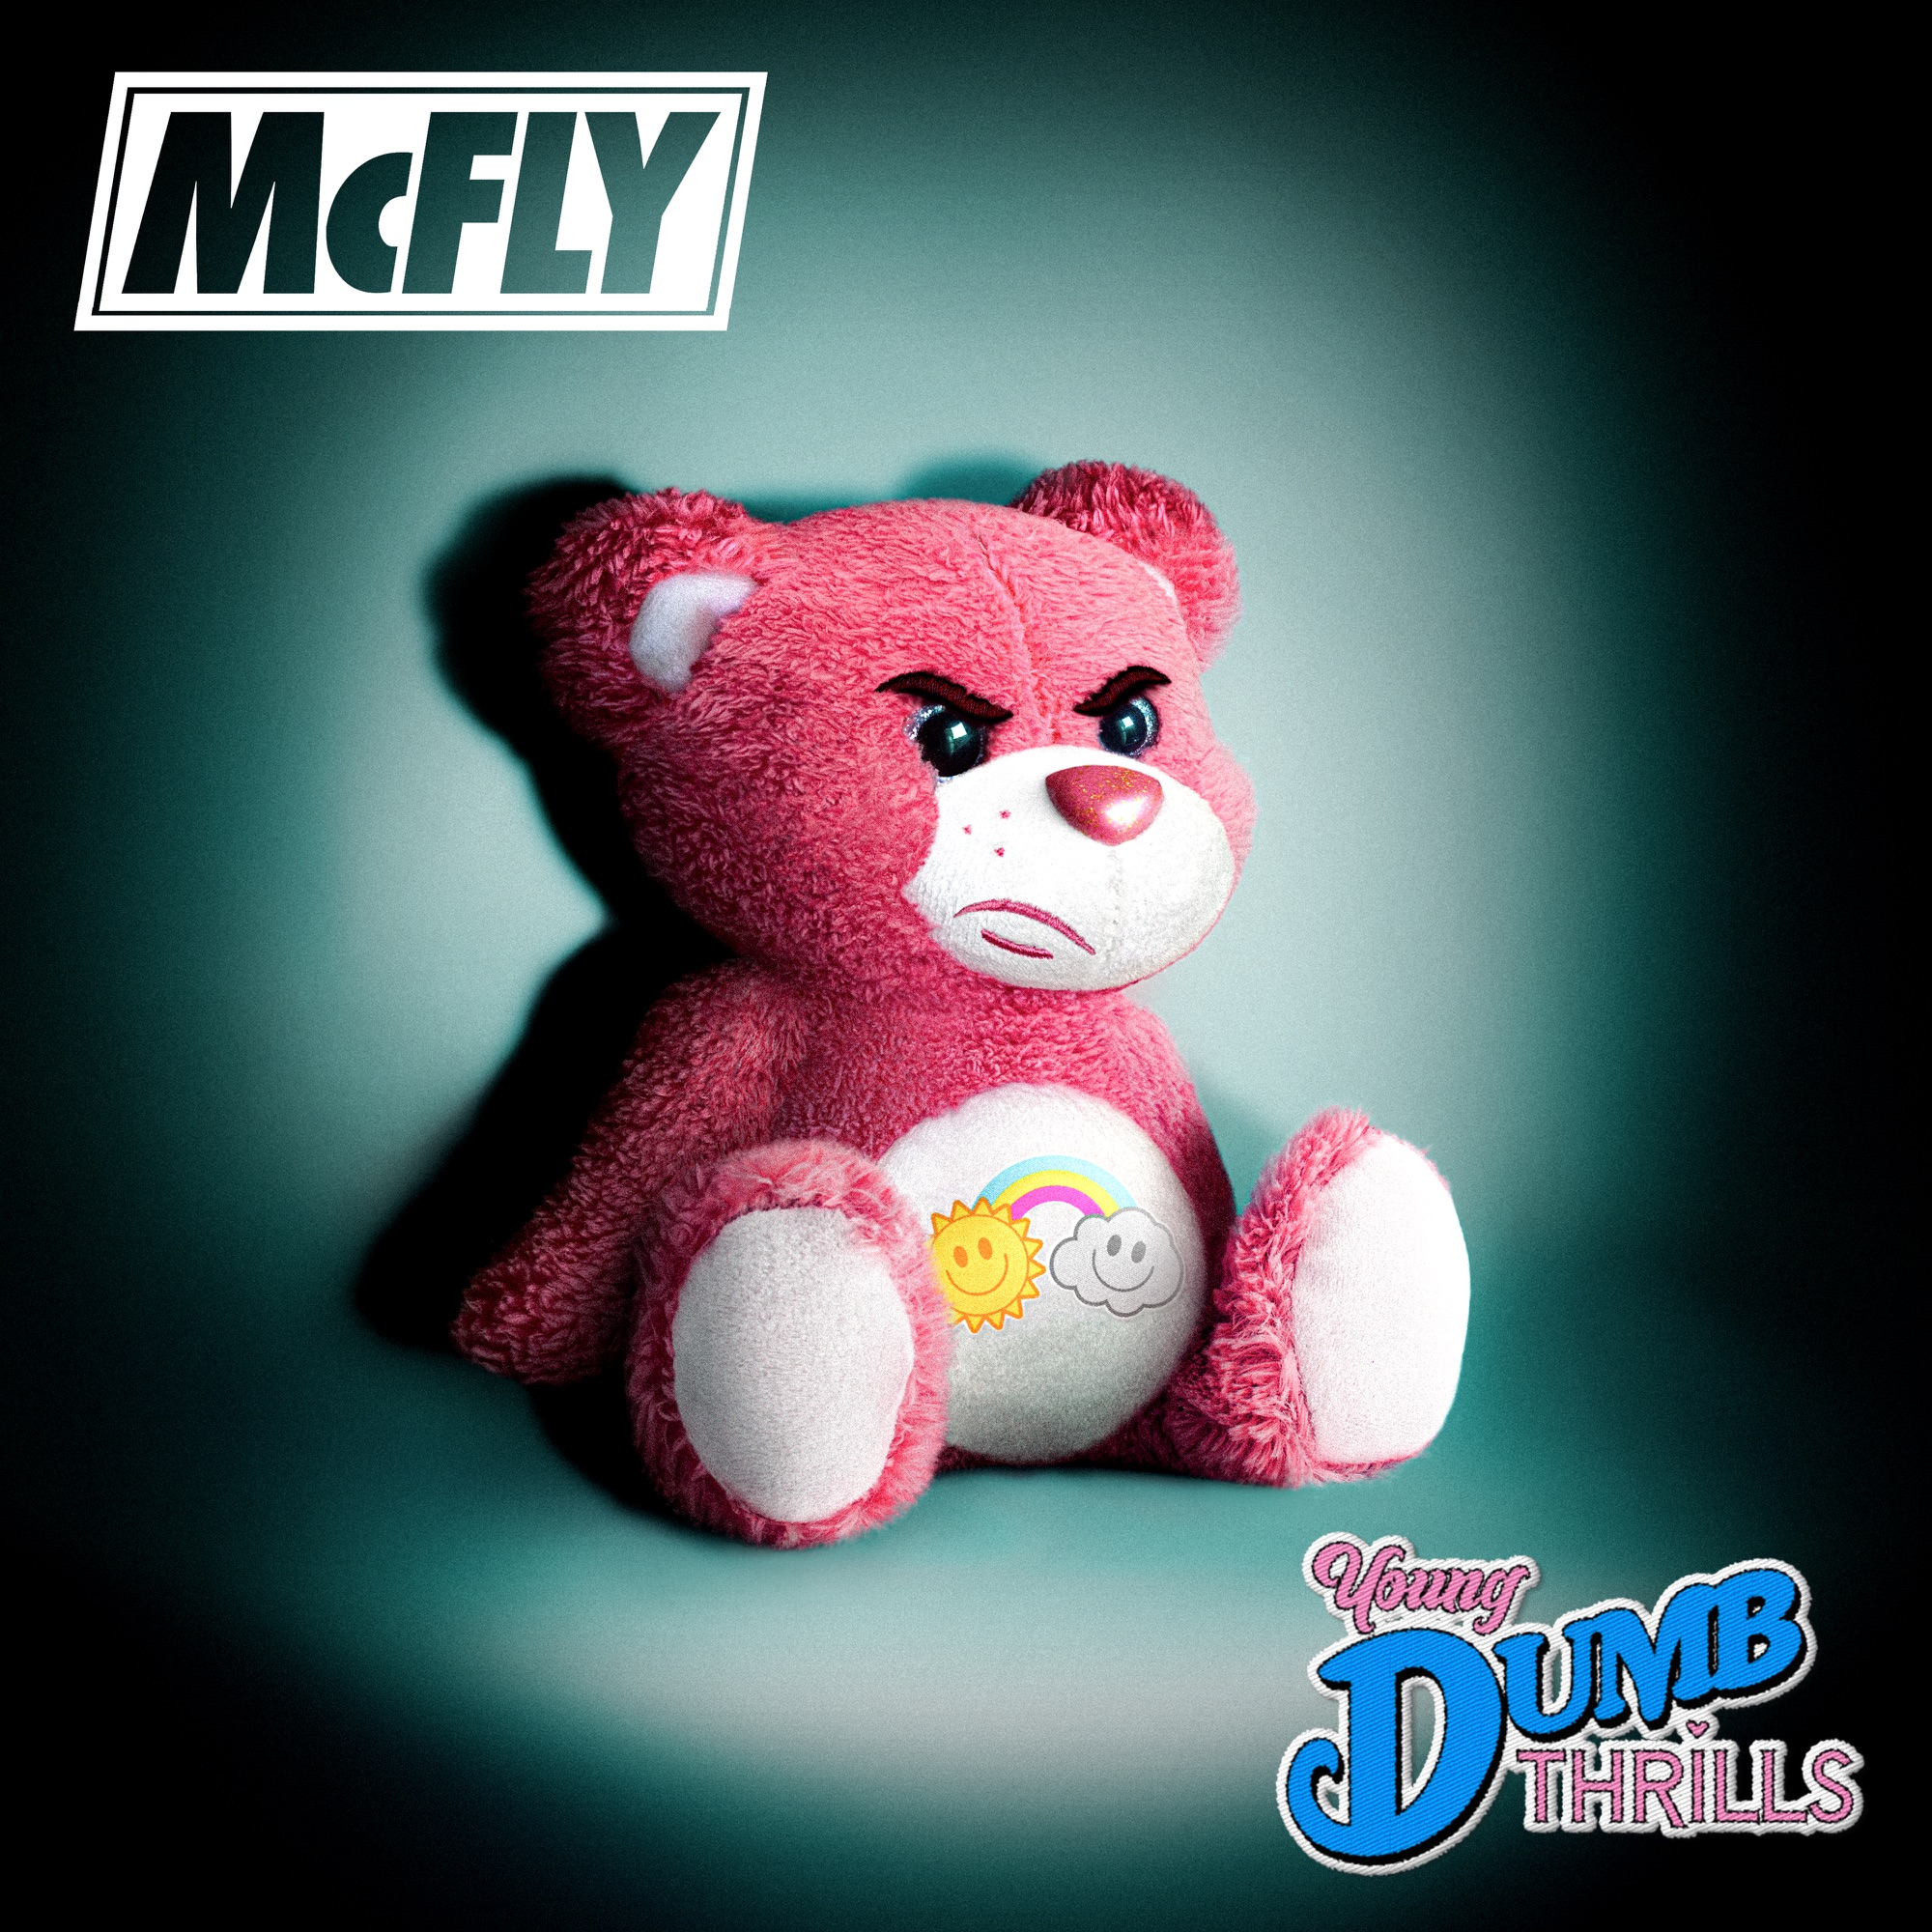 McFly - Tonight Is the Night - Single